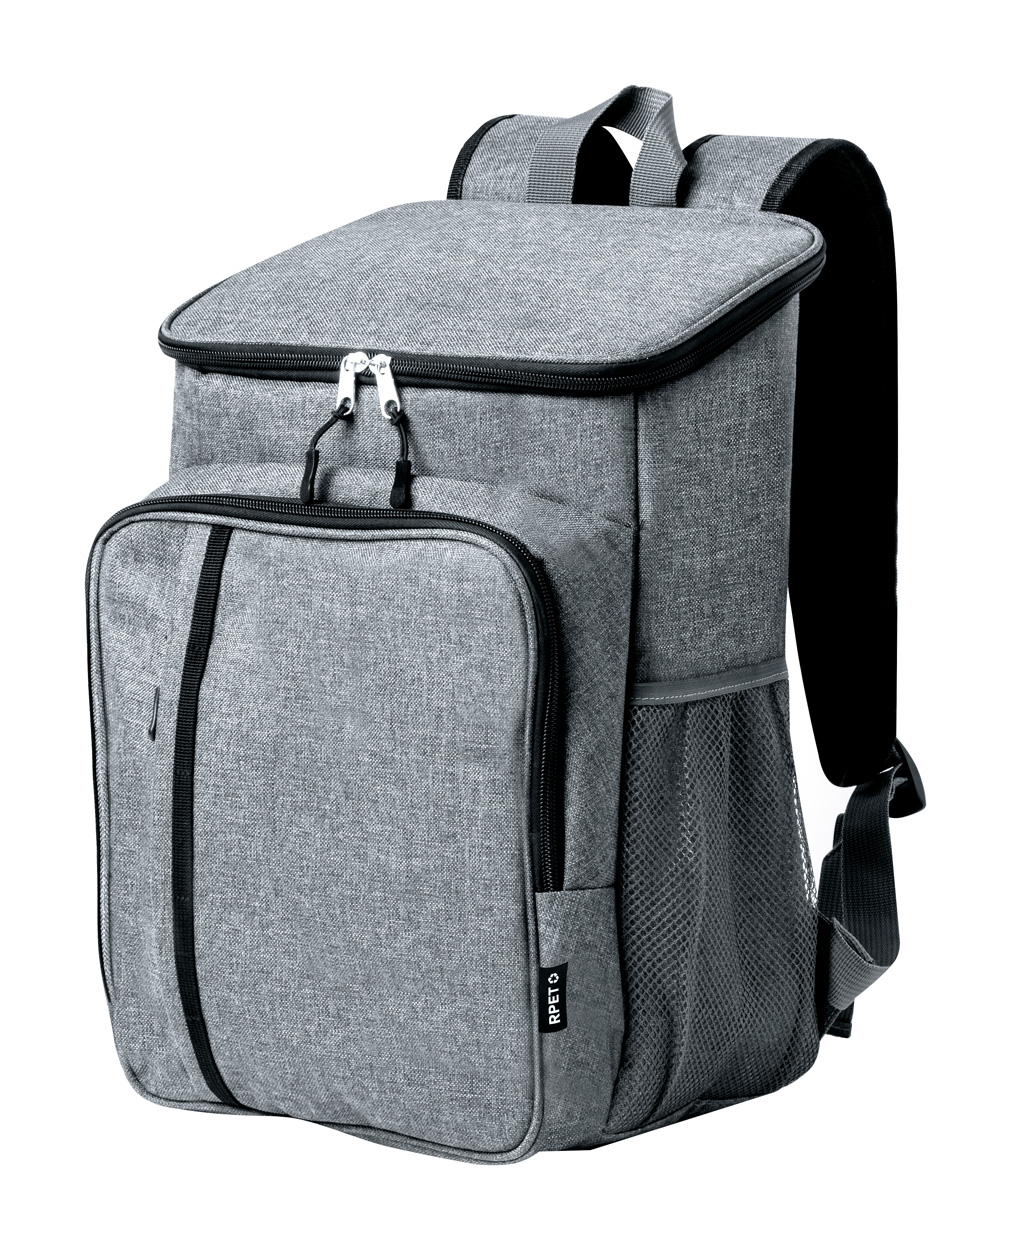 Promo  Shira cooler picnic backpack